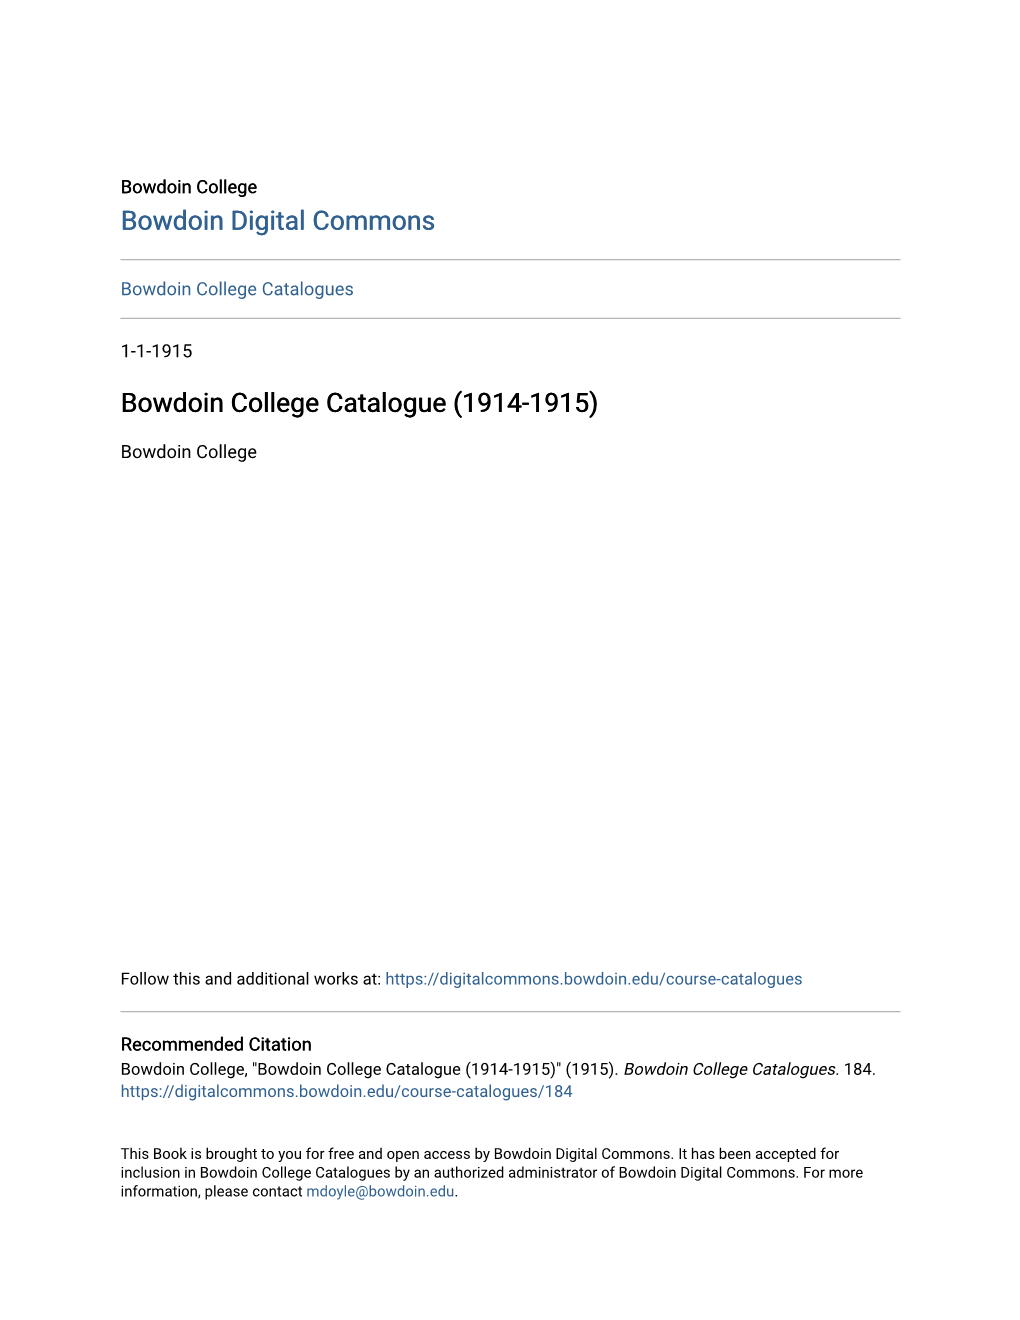 Bowdoin College Catalogue (1914-1915)